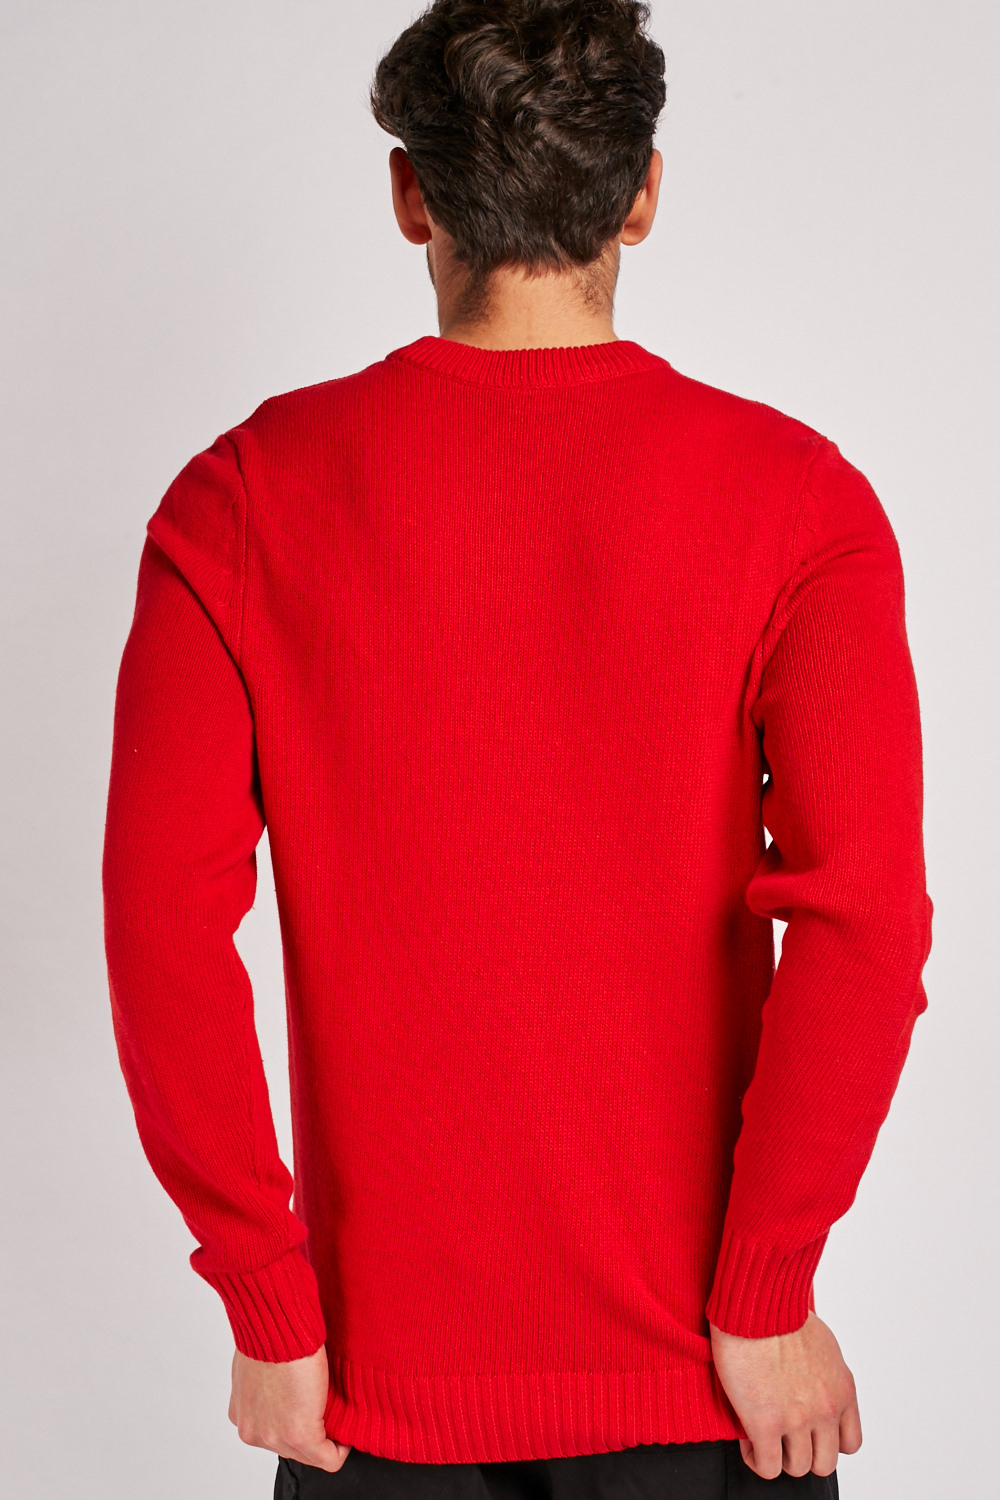 Download Crew Neck Red Knit Jumper - Just $7